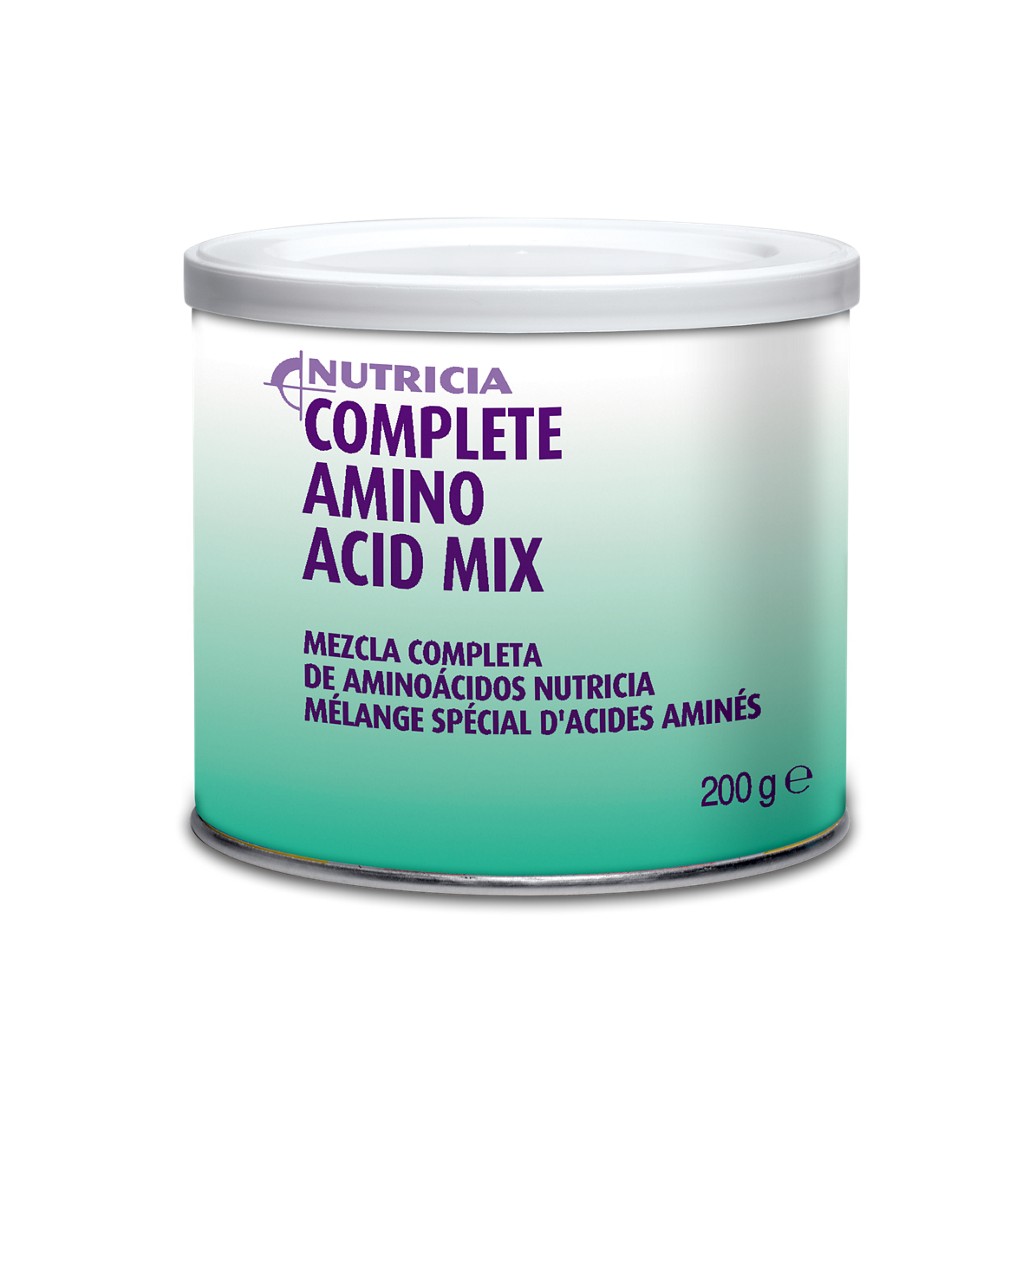 en-GB,Complete Amino Acid Mix